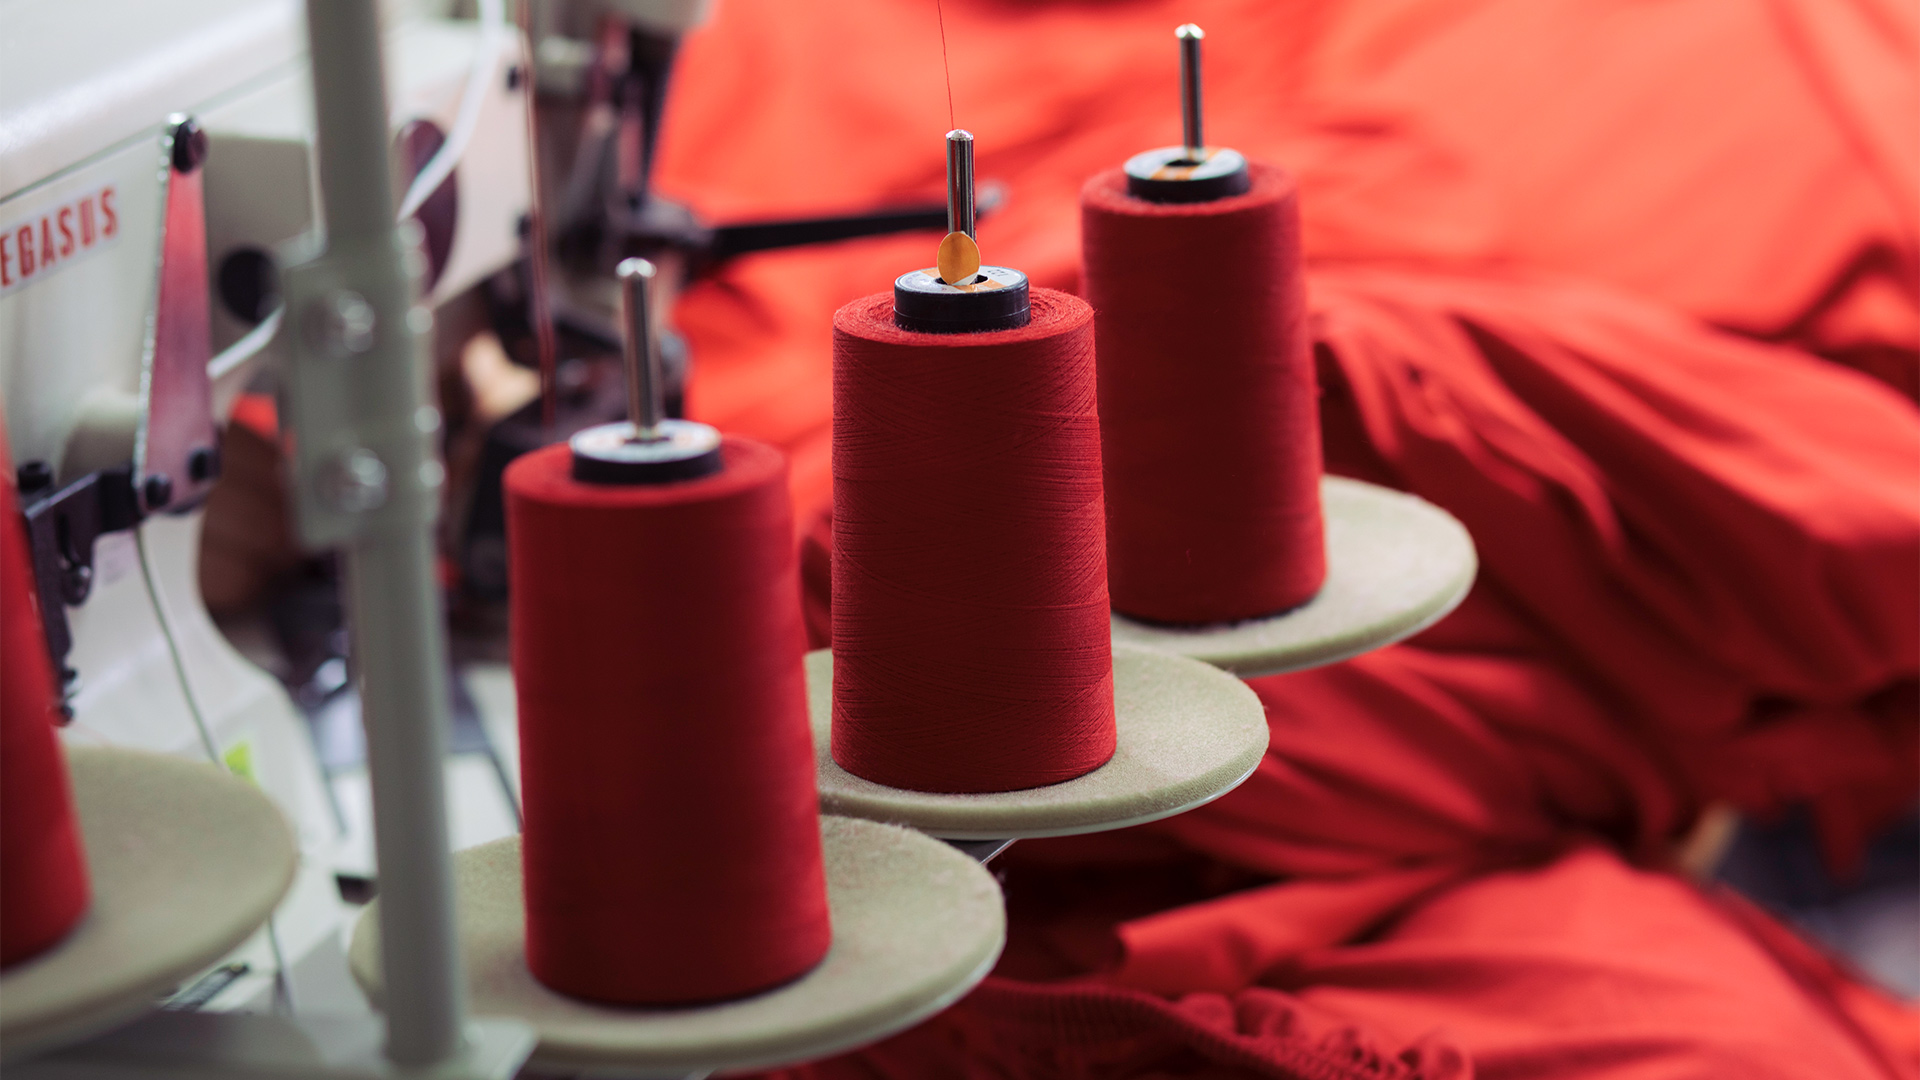 Kımıl Tekstil, production, garment